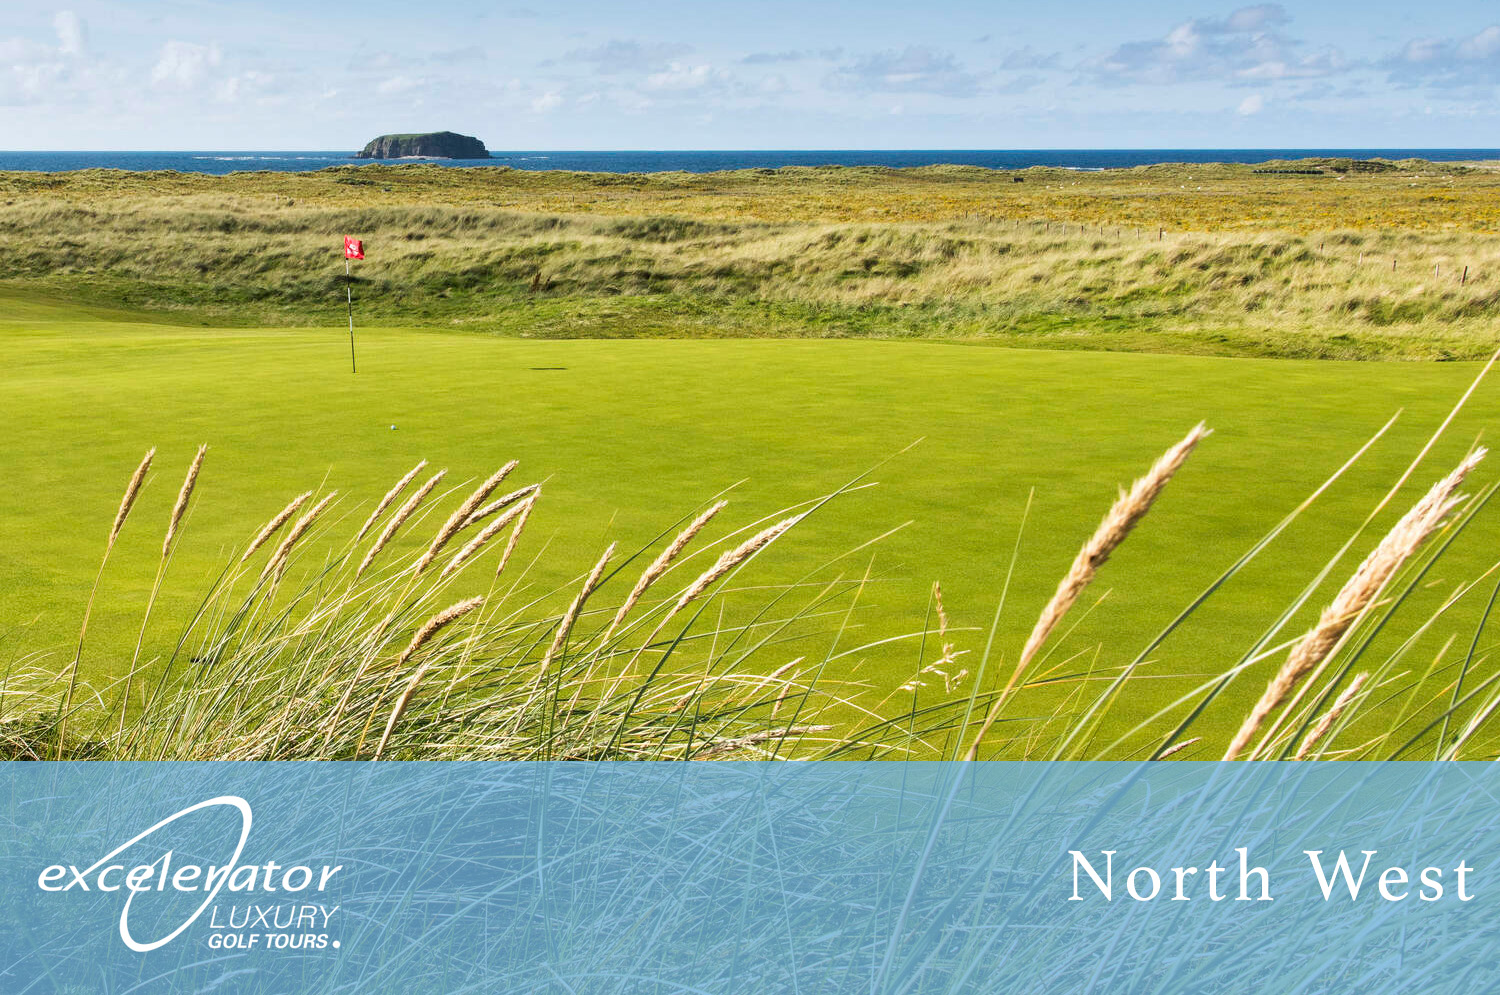 Excelerator Luxury Golf Tours - North West Region